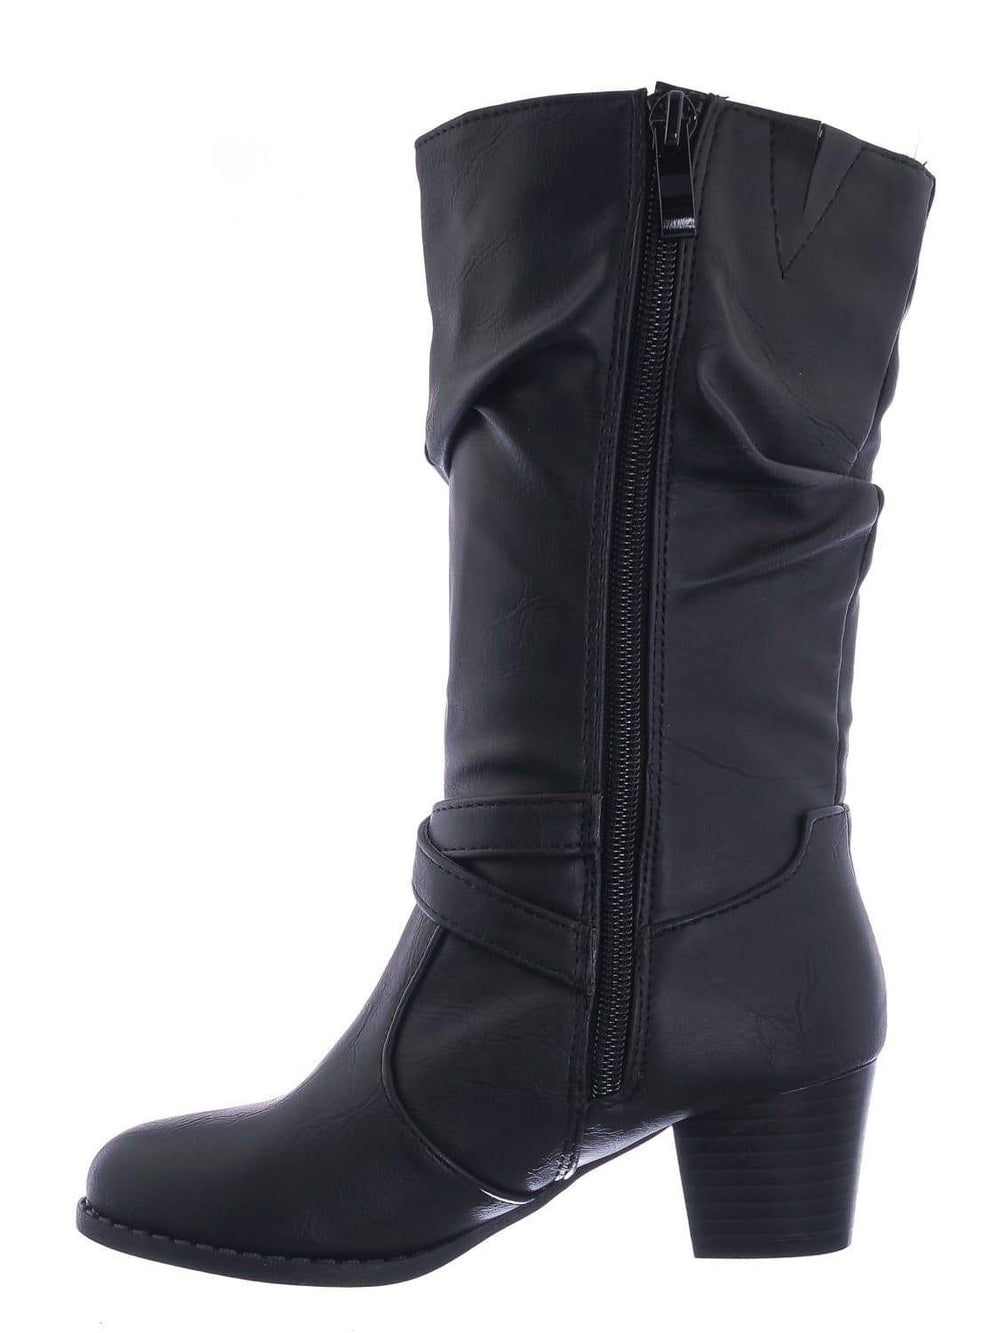 Safety52k Forever Link Childerns Harness Strapped Boots Little Girls Mid Calf Heel Shoes Aquapillar Com